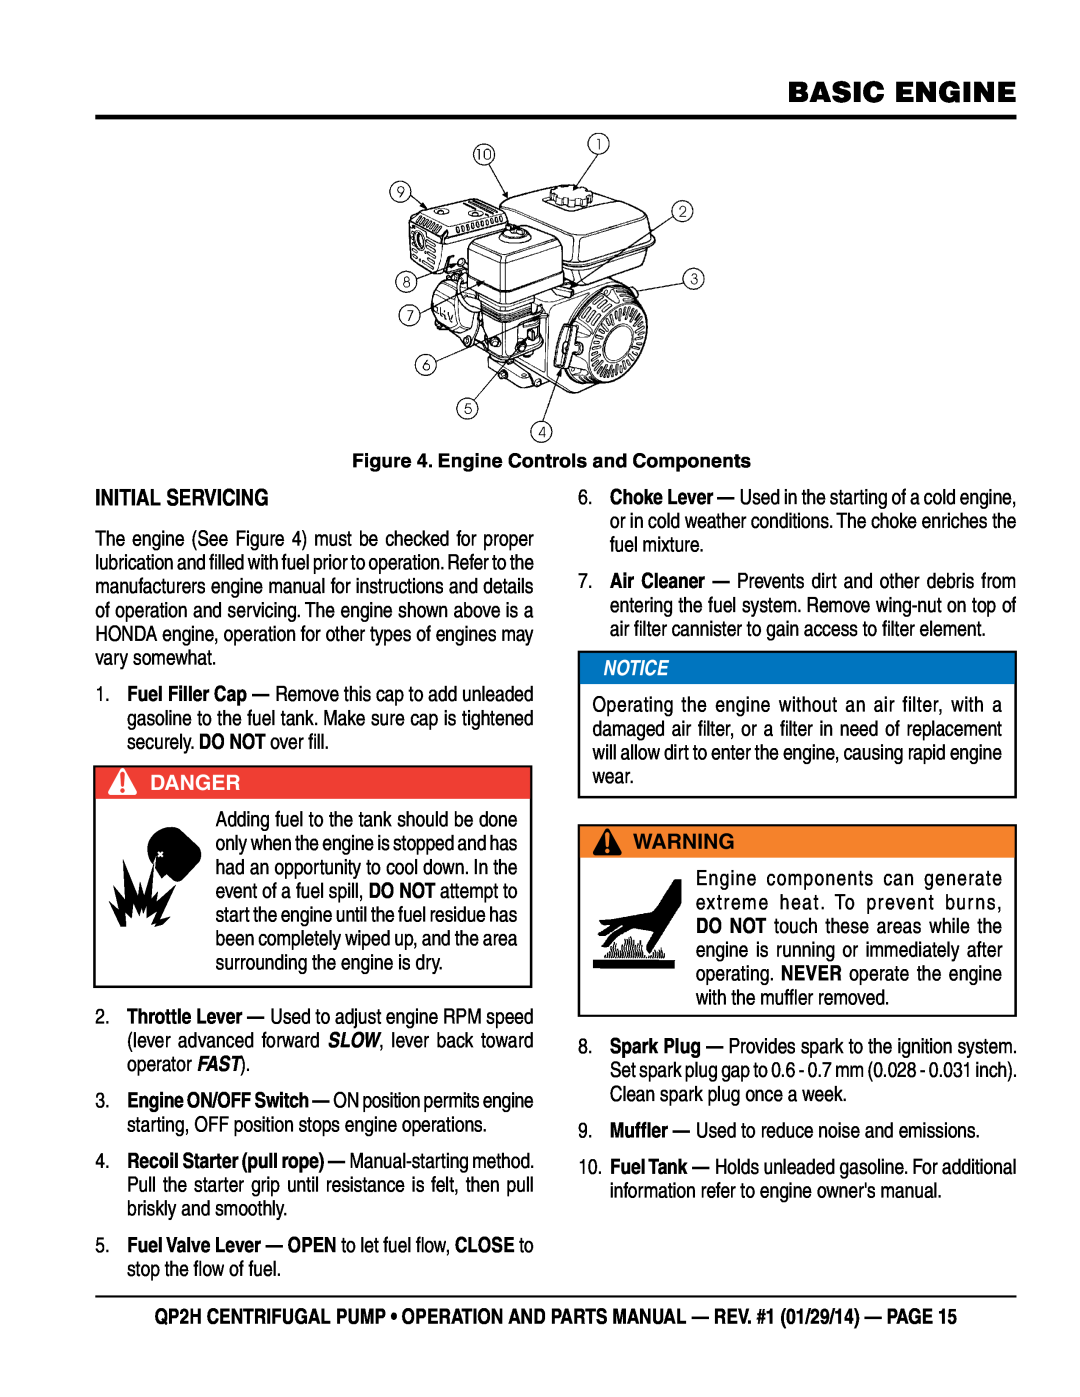 Multiquip QP2H manual Basic Engine, Initial Servicing, Danger, Notice 